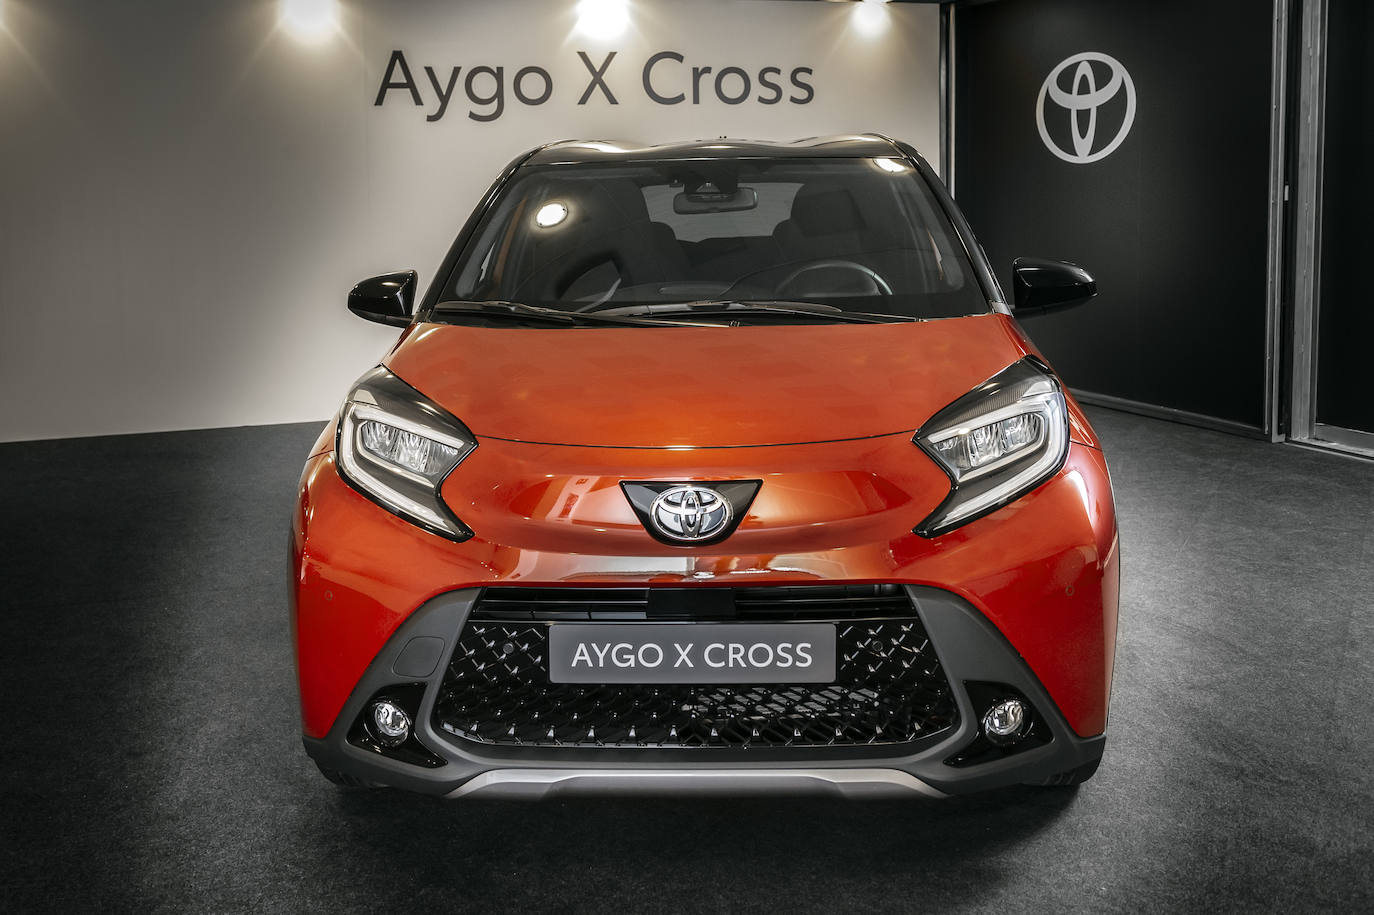 bZ4X, Aygo X Cross y GR86: la nueva familia Toyota